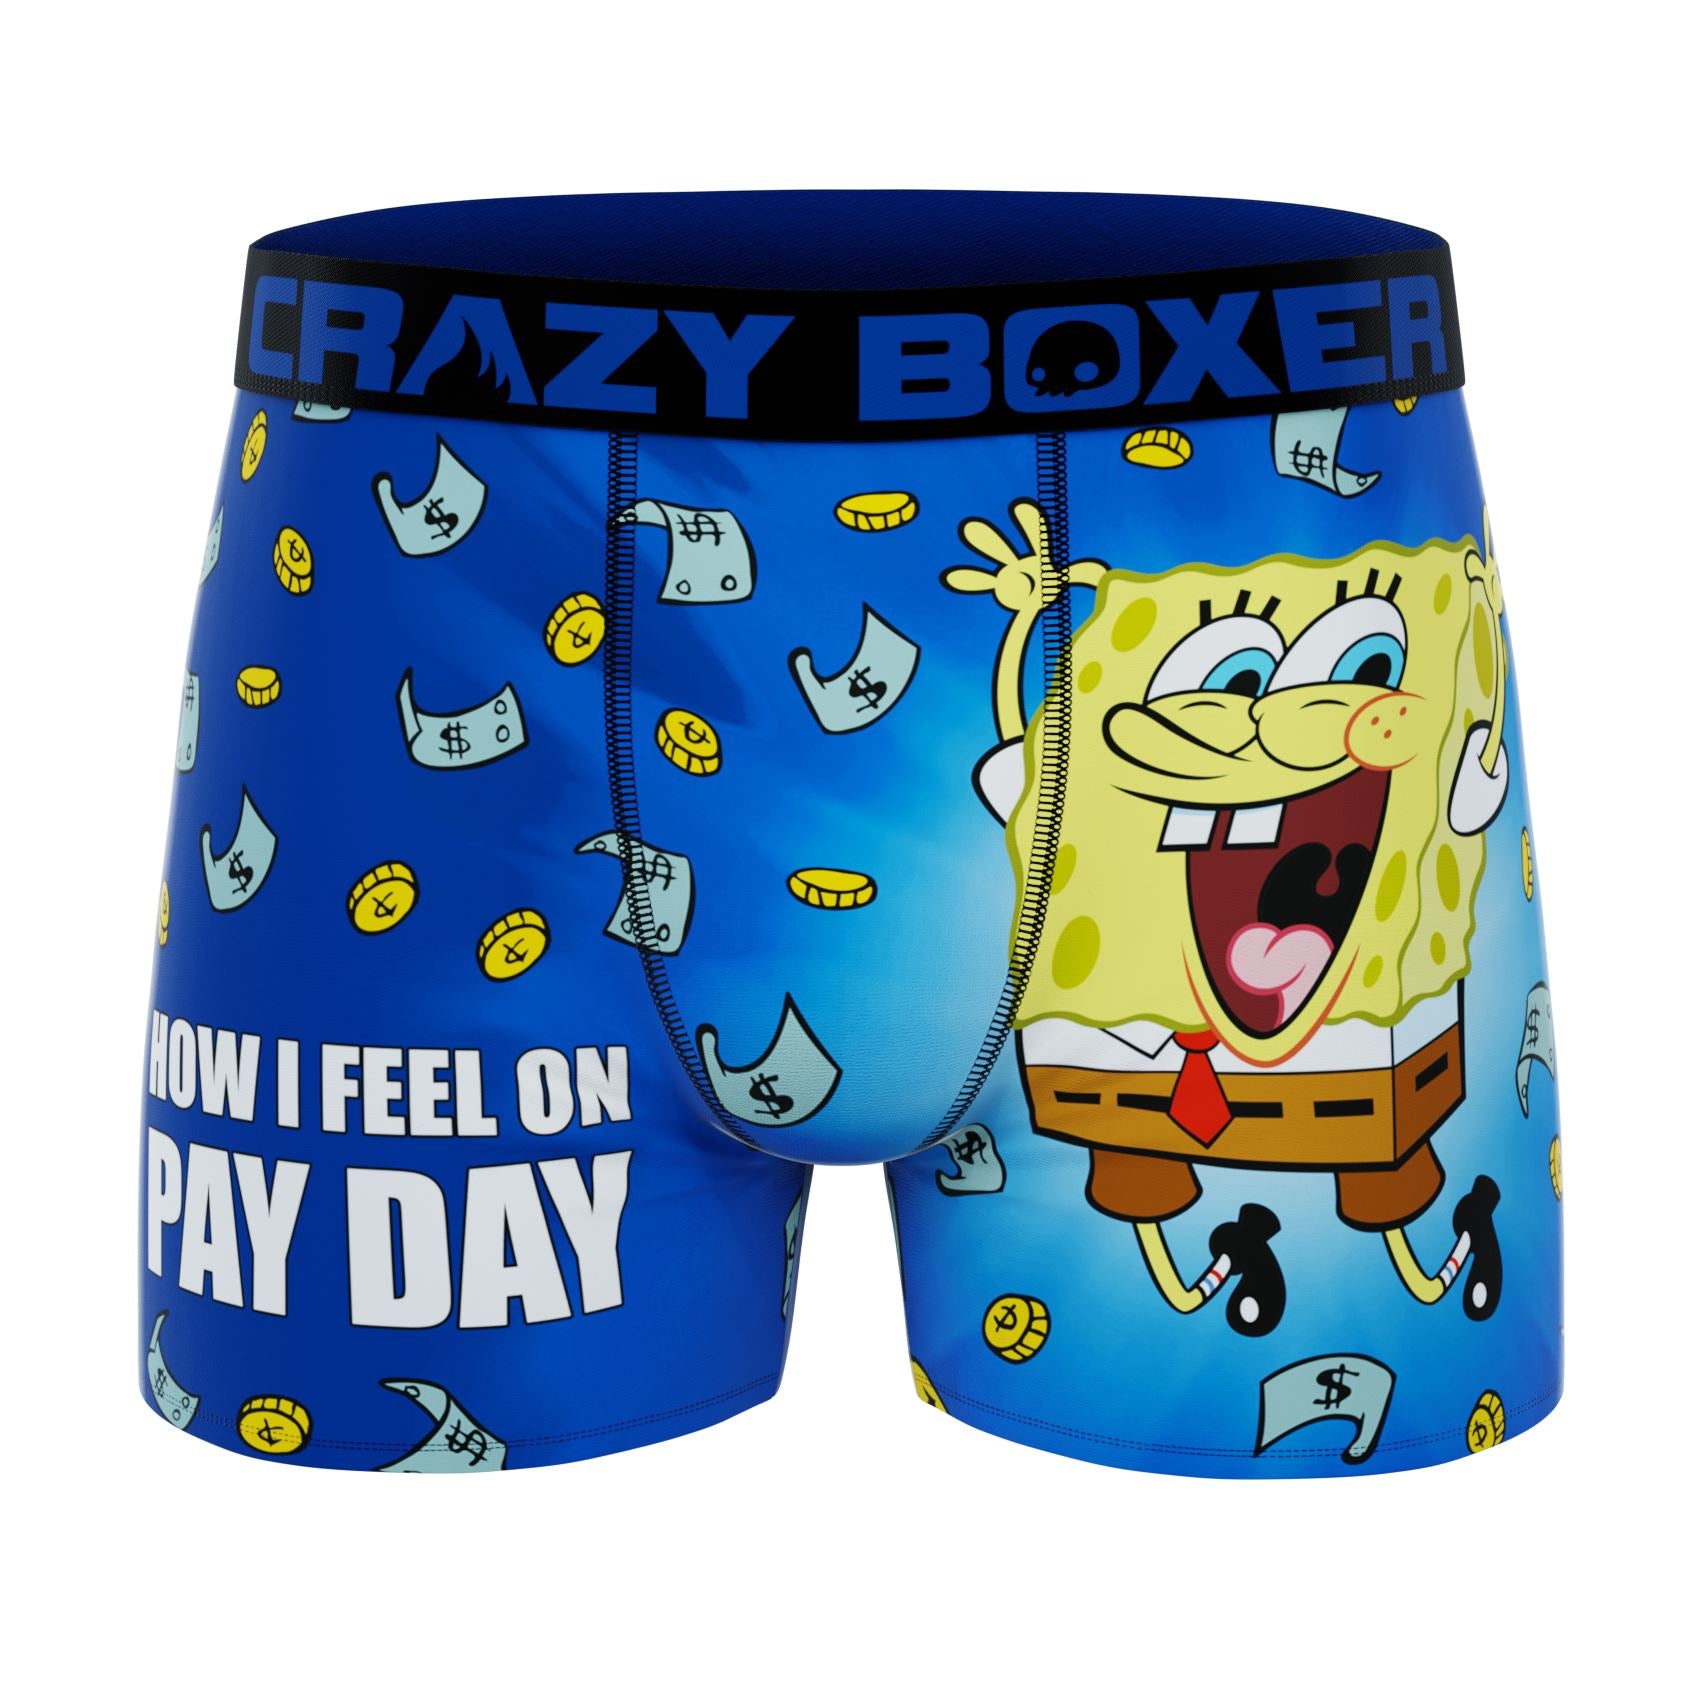 Crazy Boxer Briefs Underwear Spongebob Squarepants Cartoon Mens